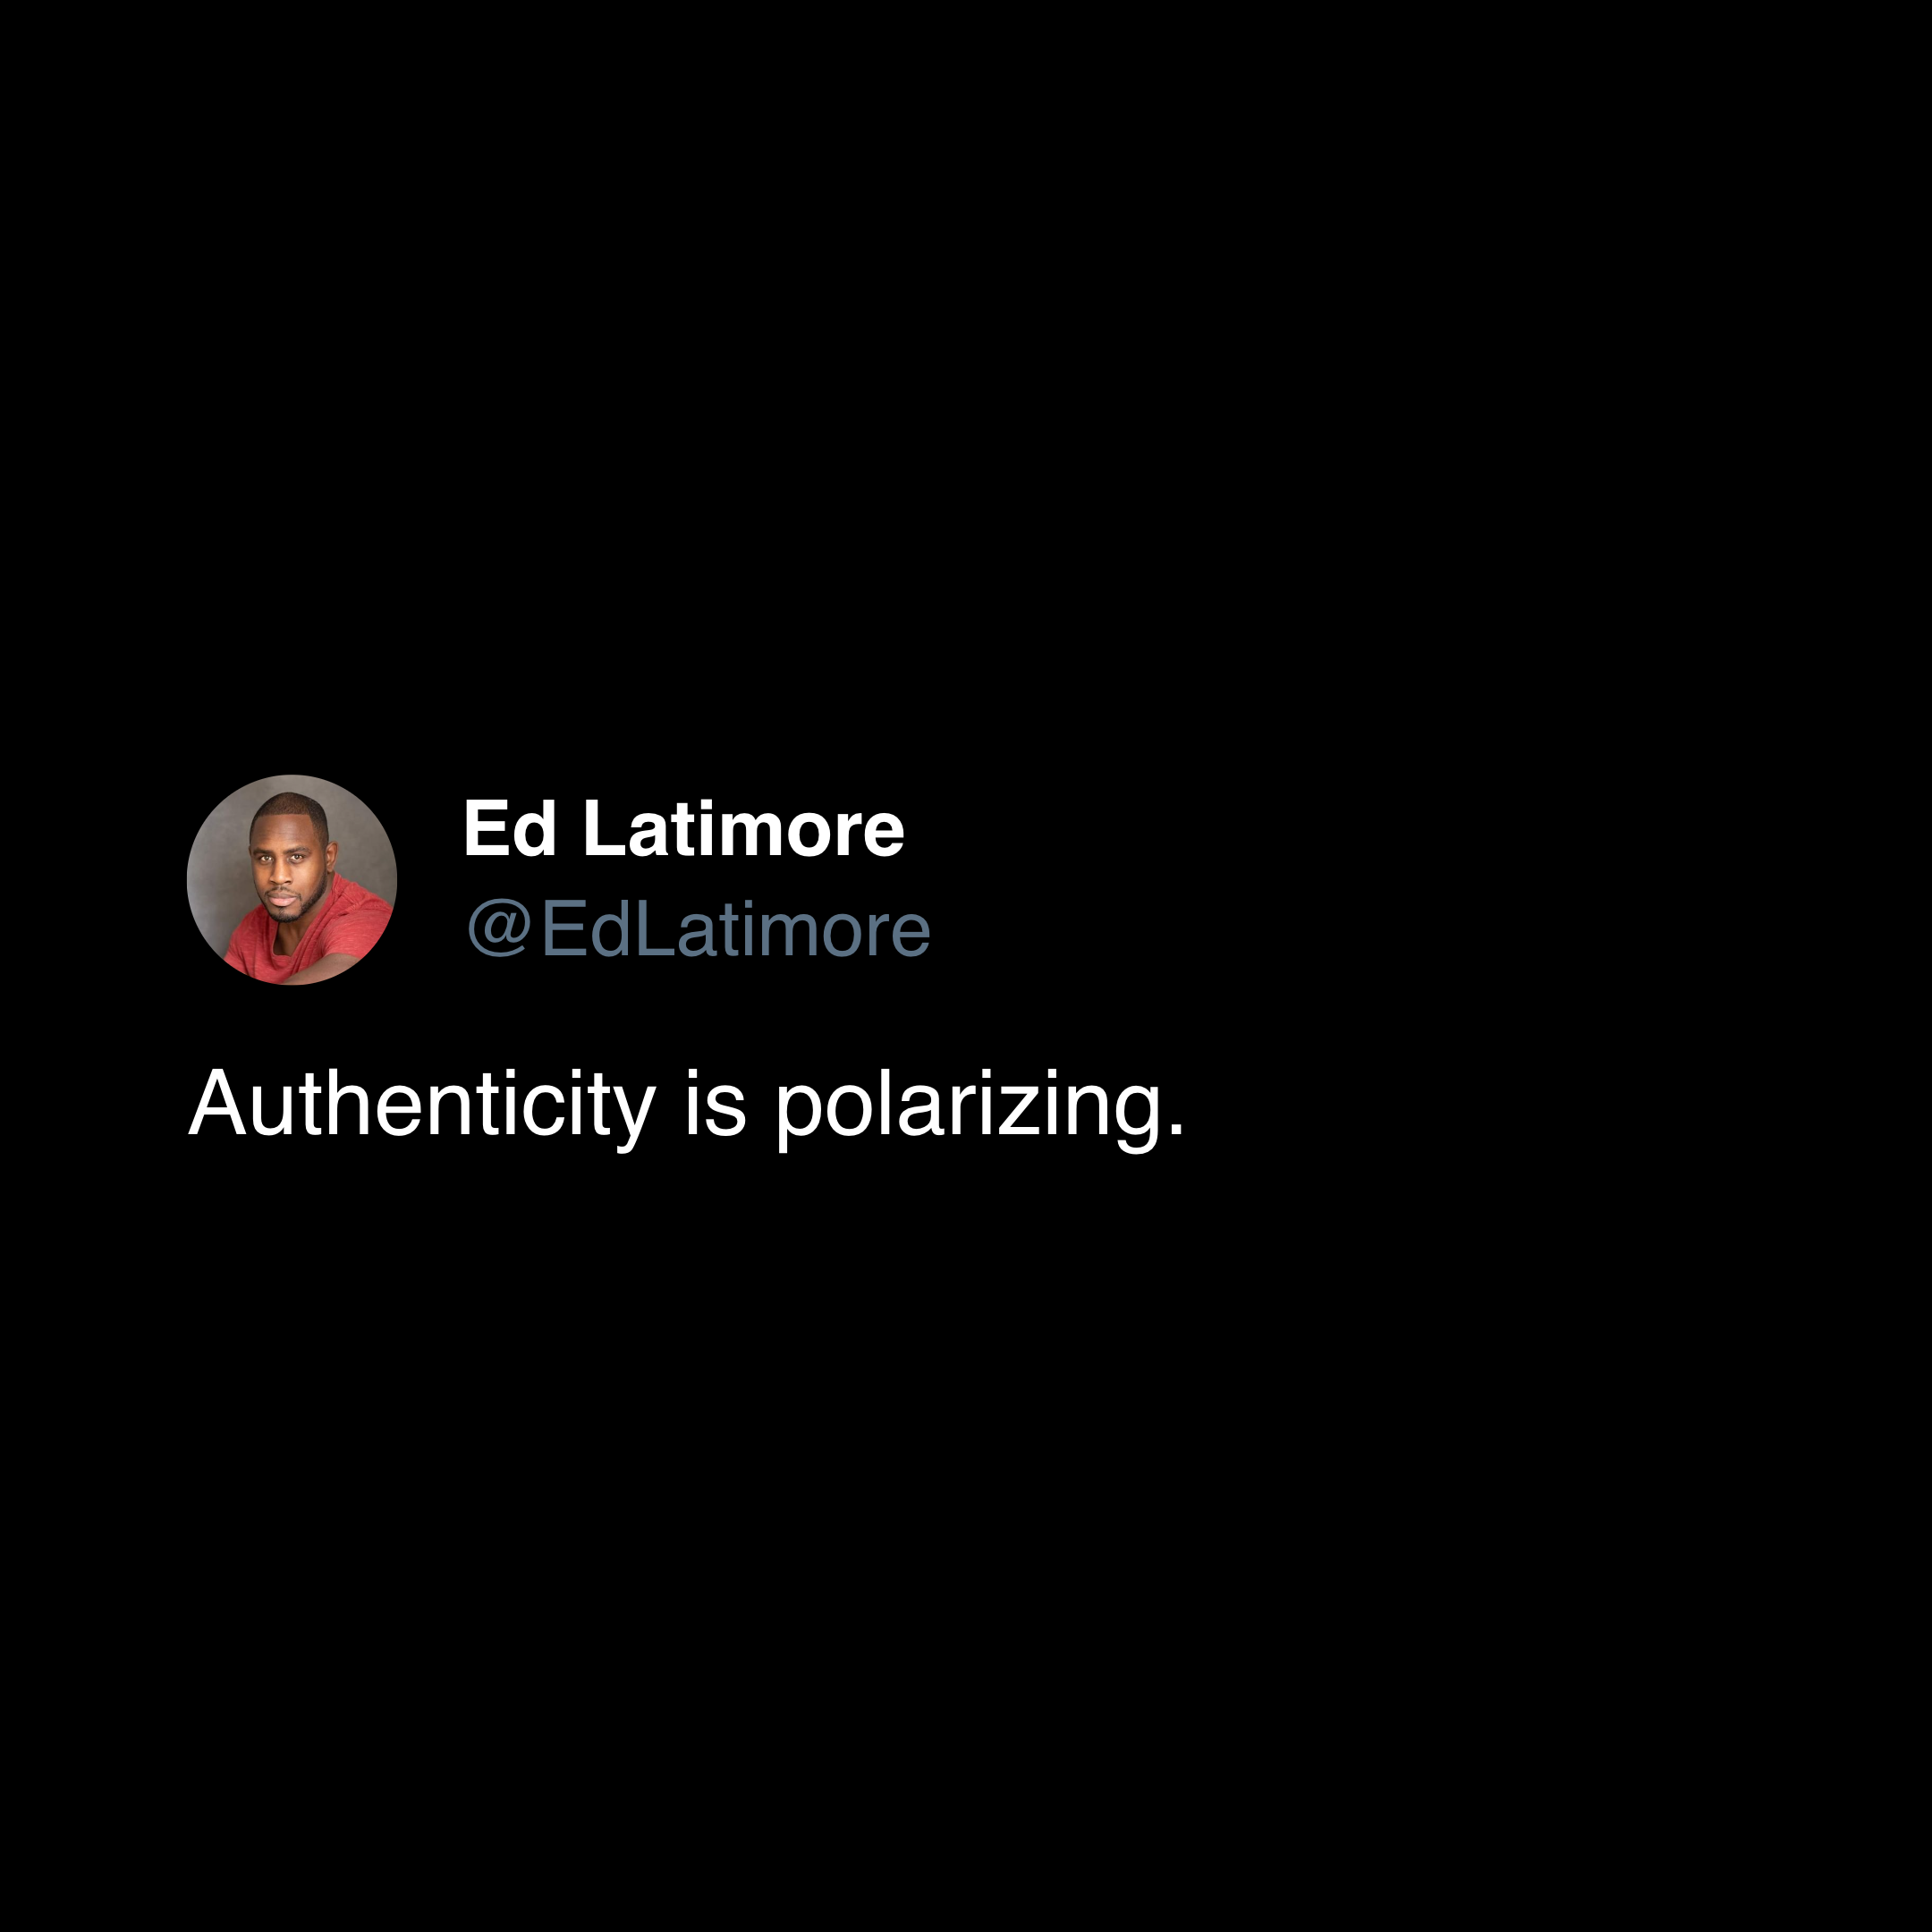 ed latimore authenticity quote "authenticity is polarizing"